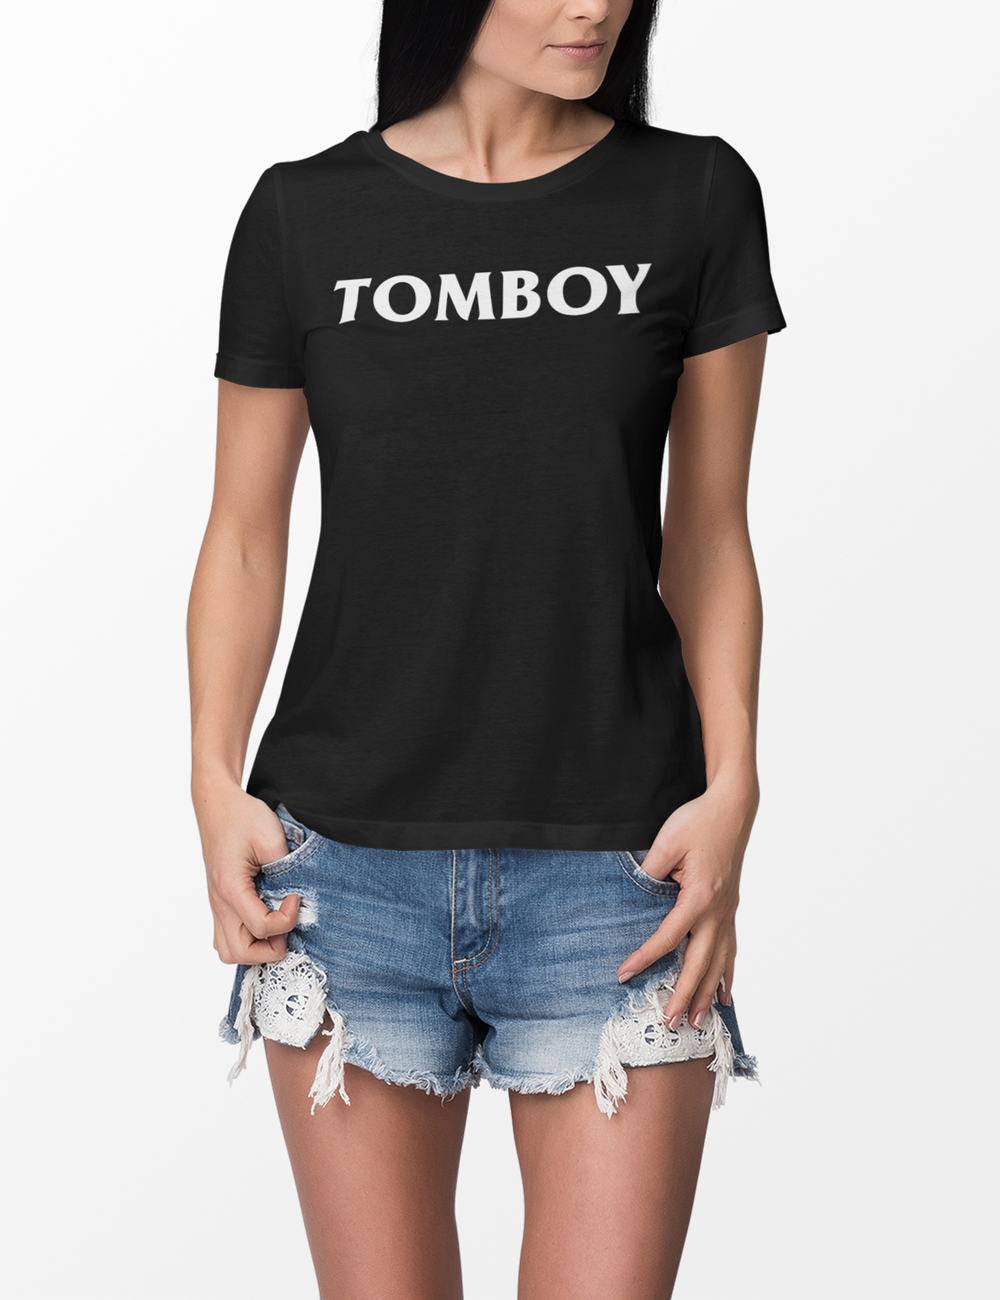 Tomboy | Women's Style T-Shirt OniTakai